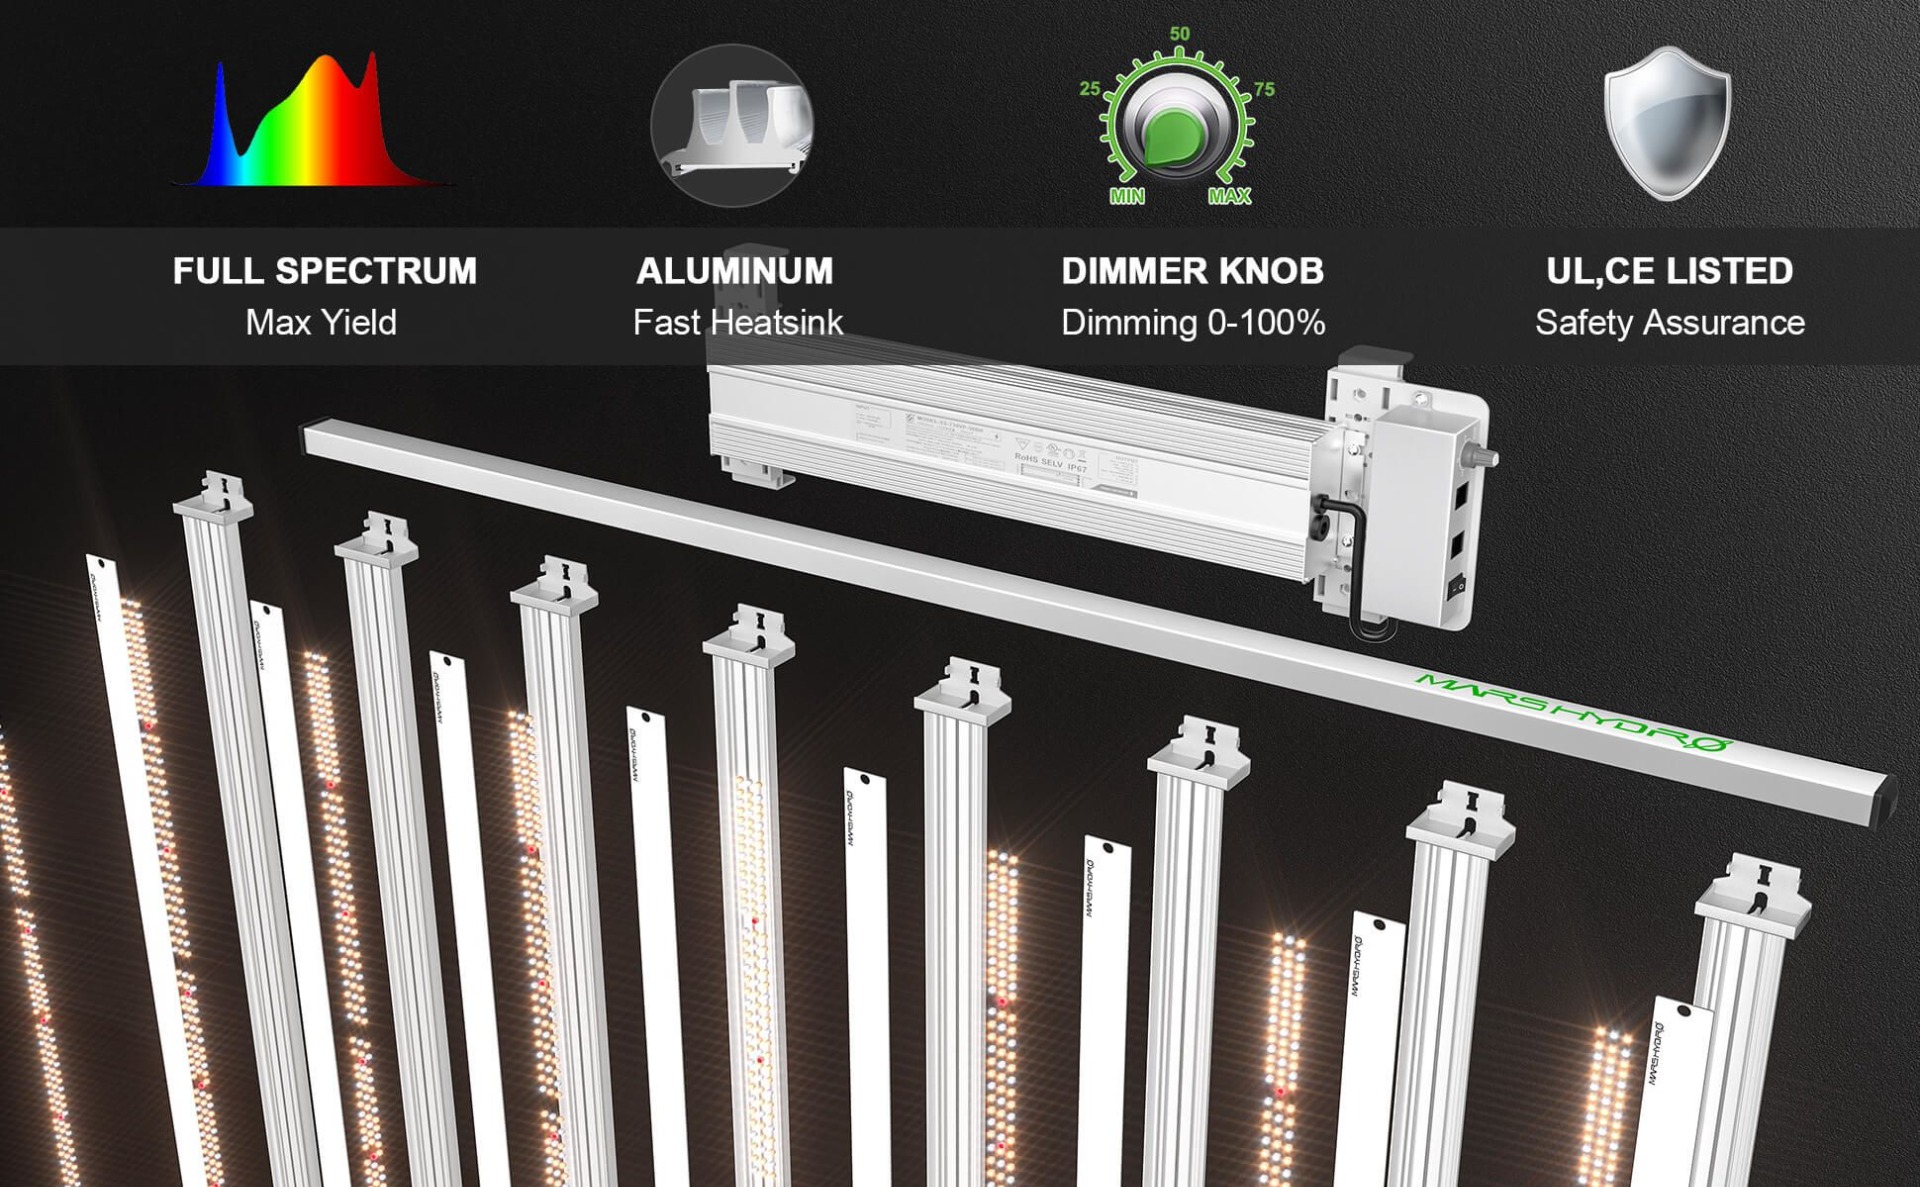 Mars Hydro FC-E8000 LED grow light full spectrum dimming aluminum heat sink features